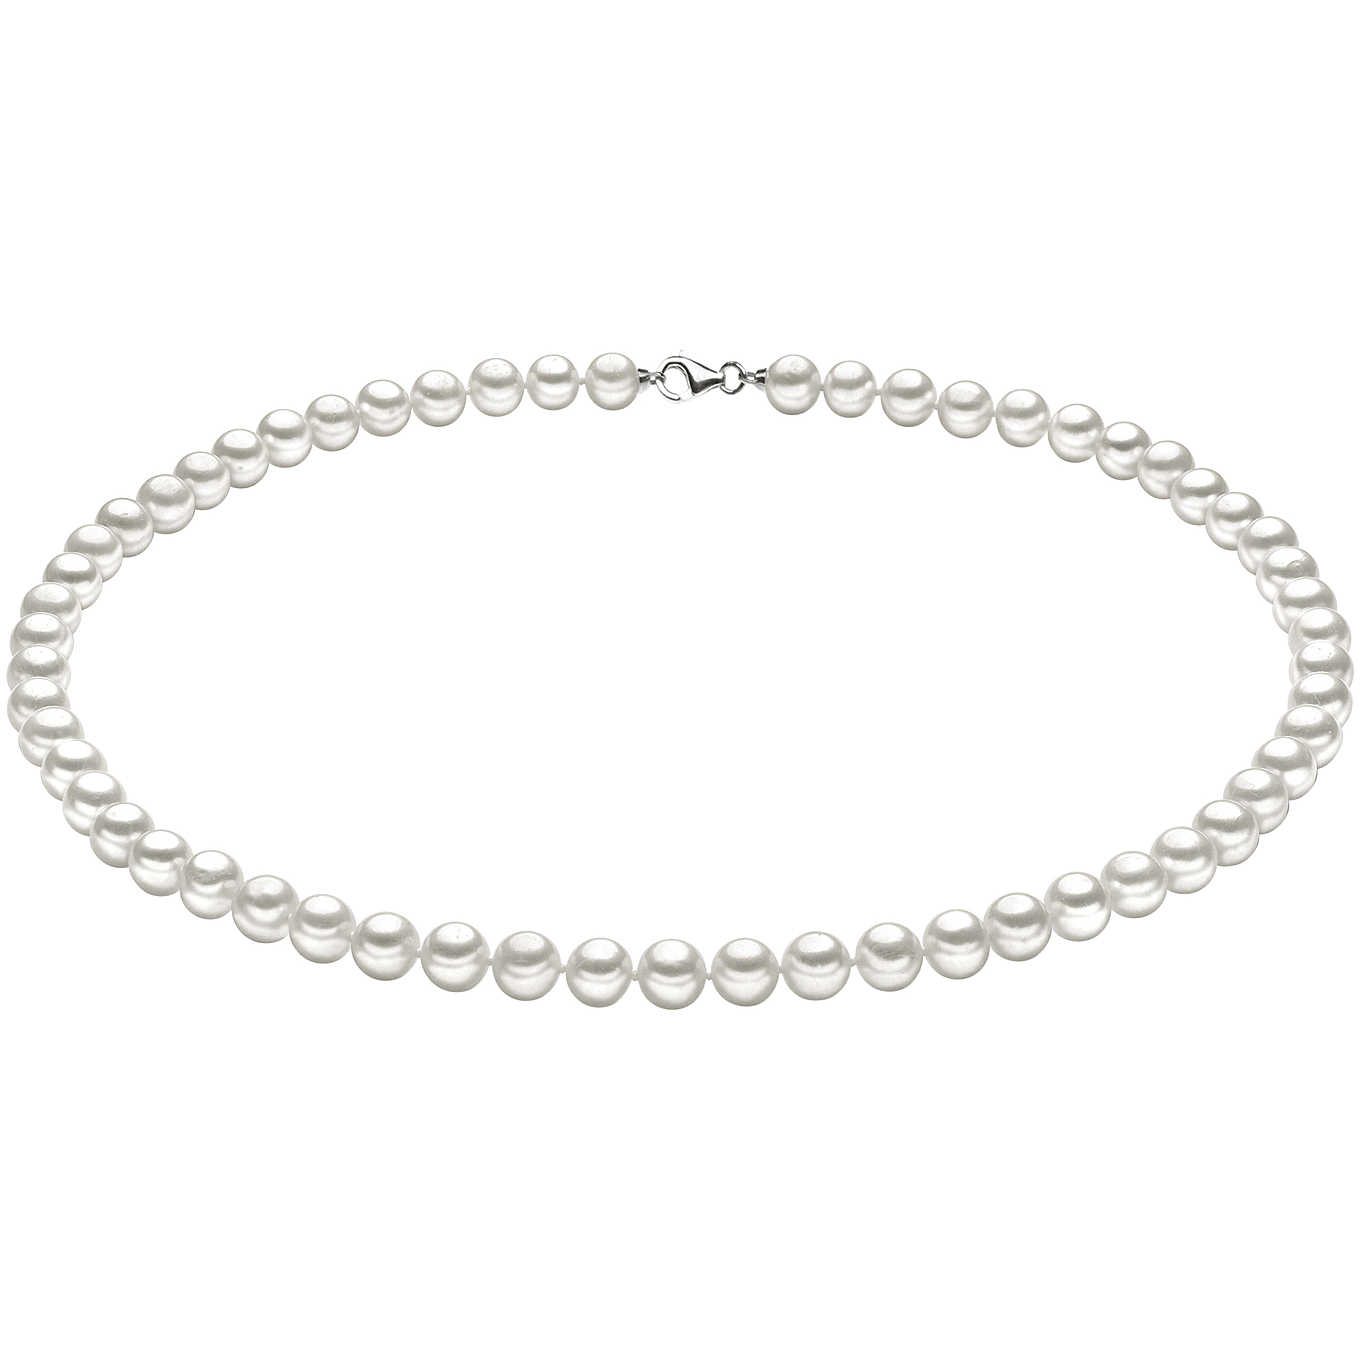 Women's Necklace Comete Gioielliery Pearls Silver FWQ 104 S